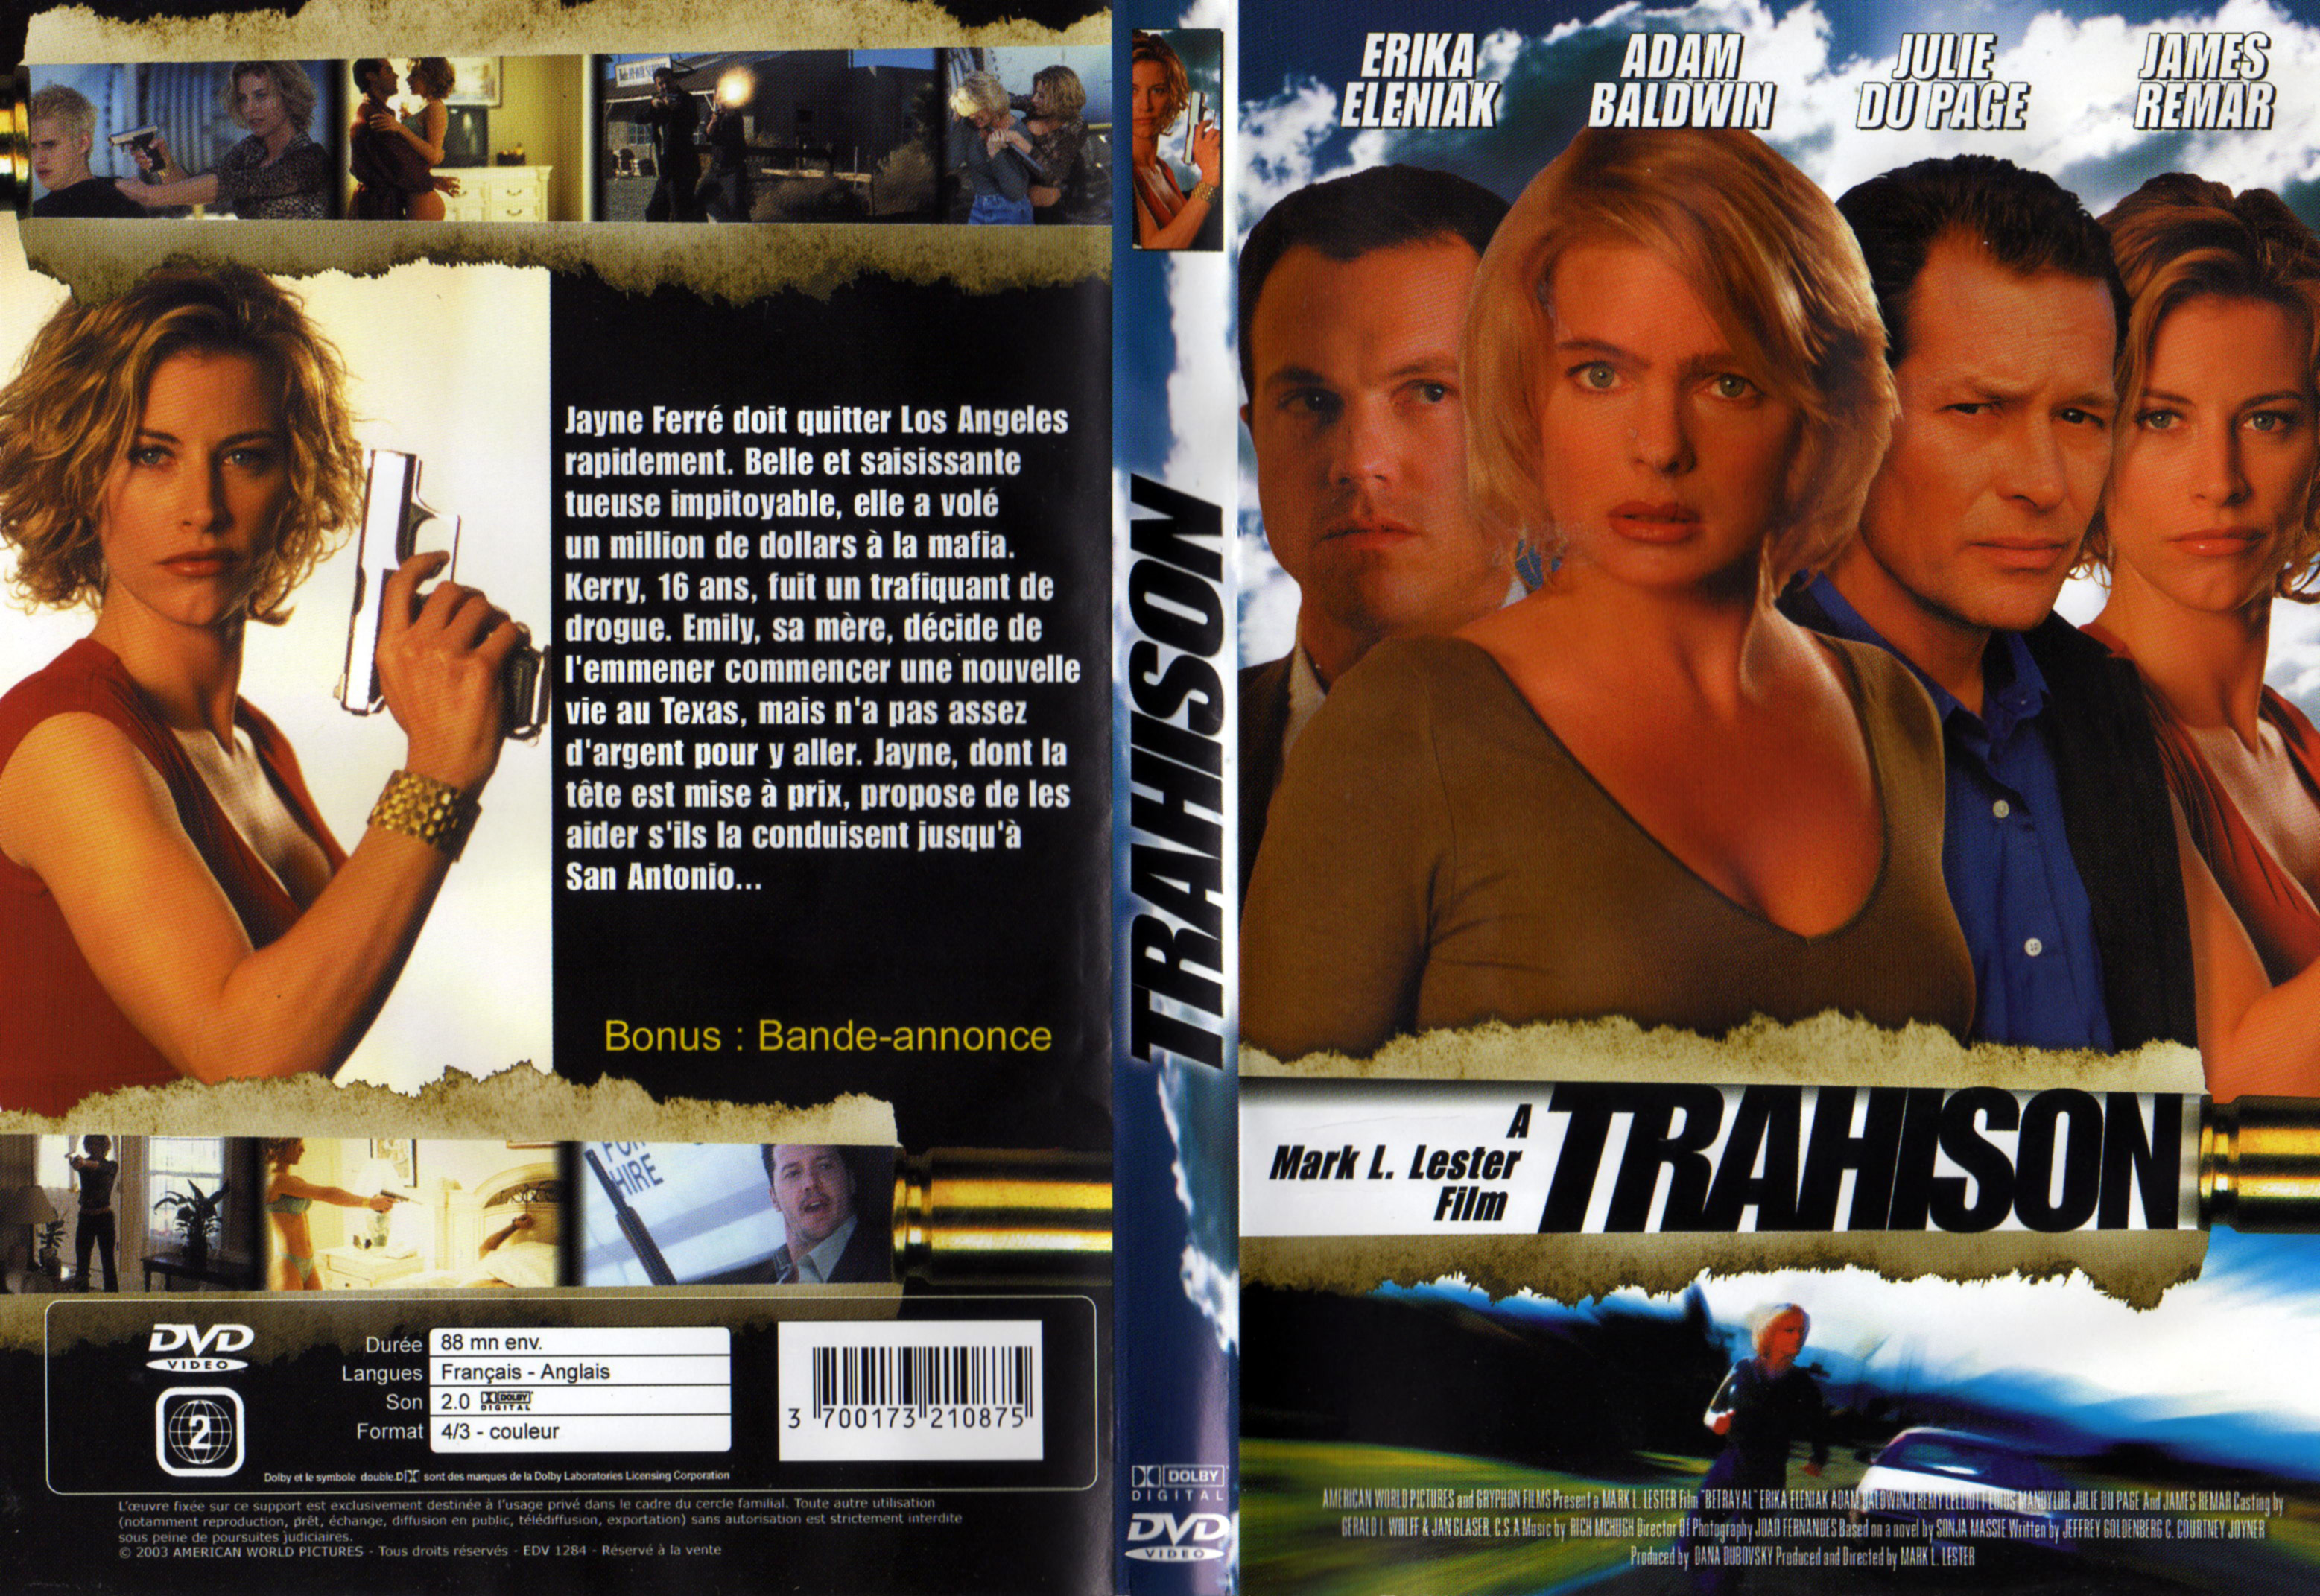 Jaquette DVD Trahison (2003)